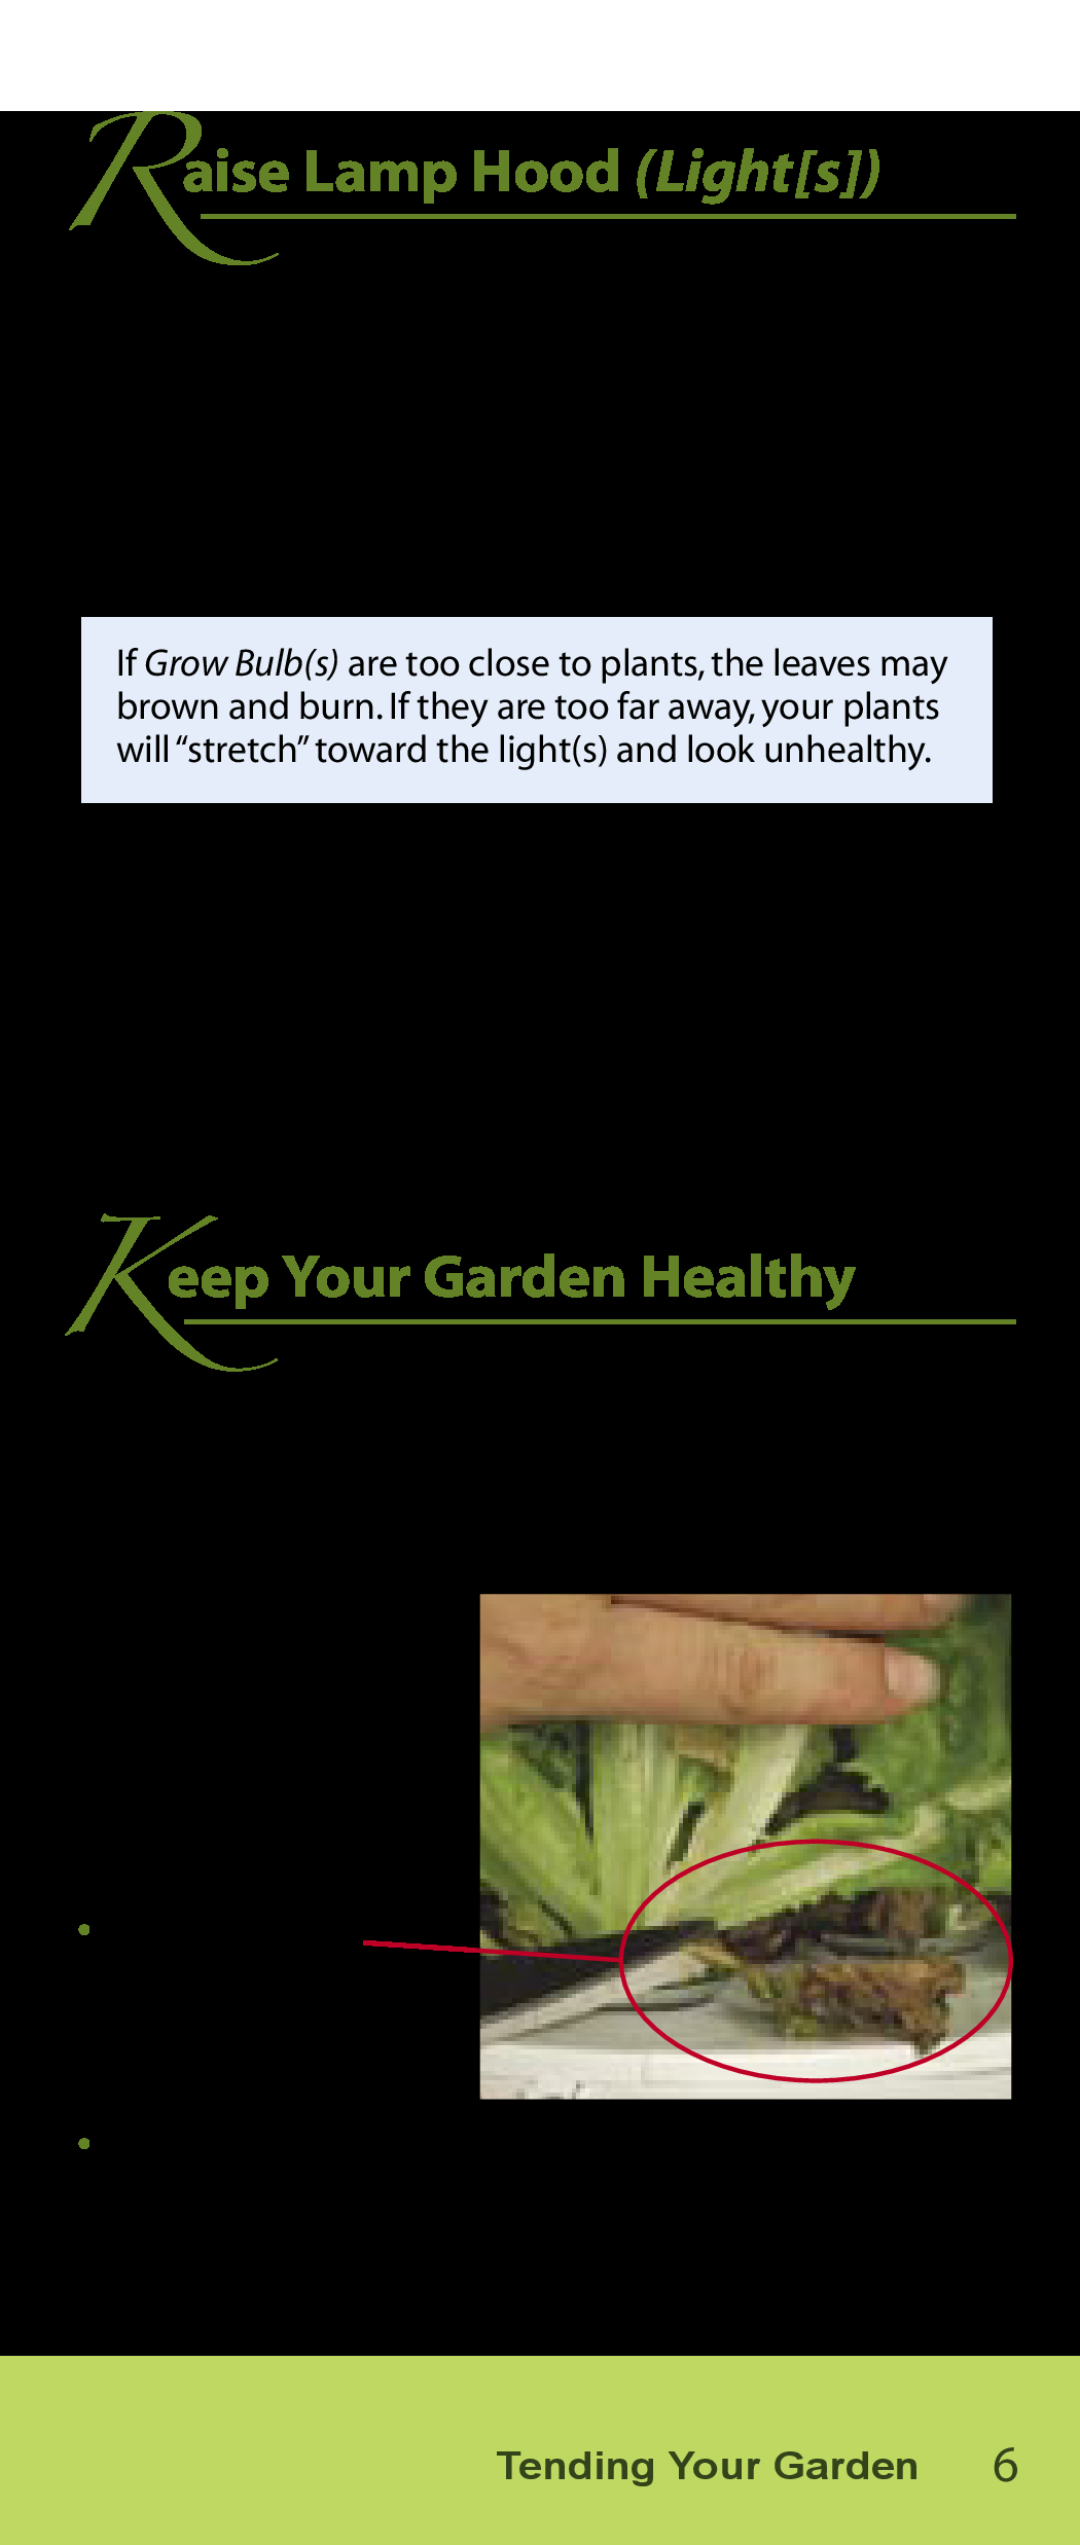 AeroGarden Salad Series manual Raise Lamp Hood Lights, Keep Your Garden Healthy 